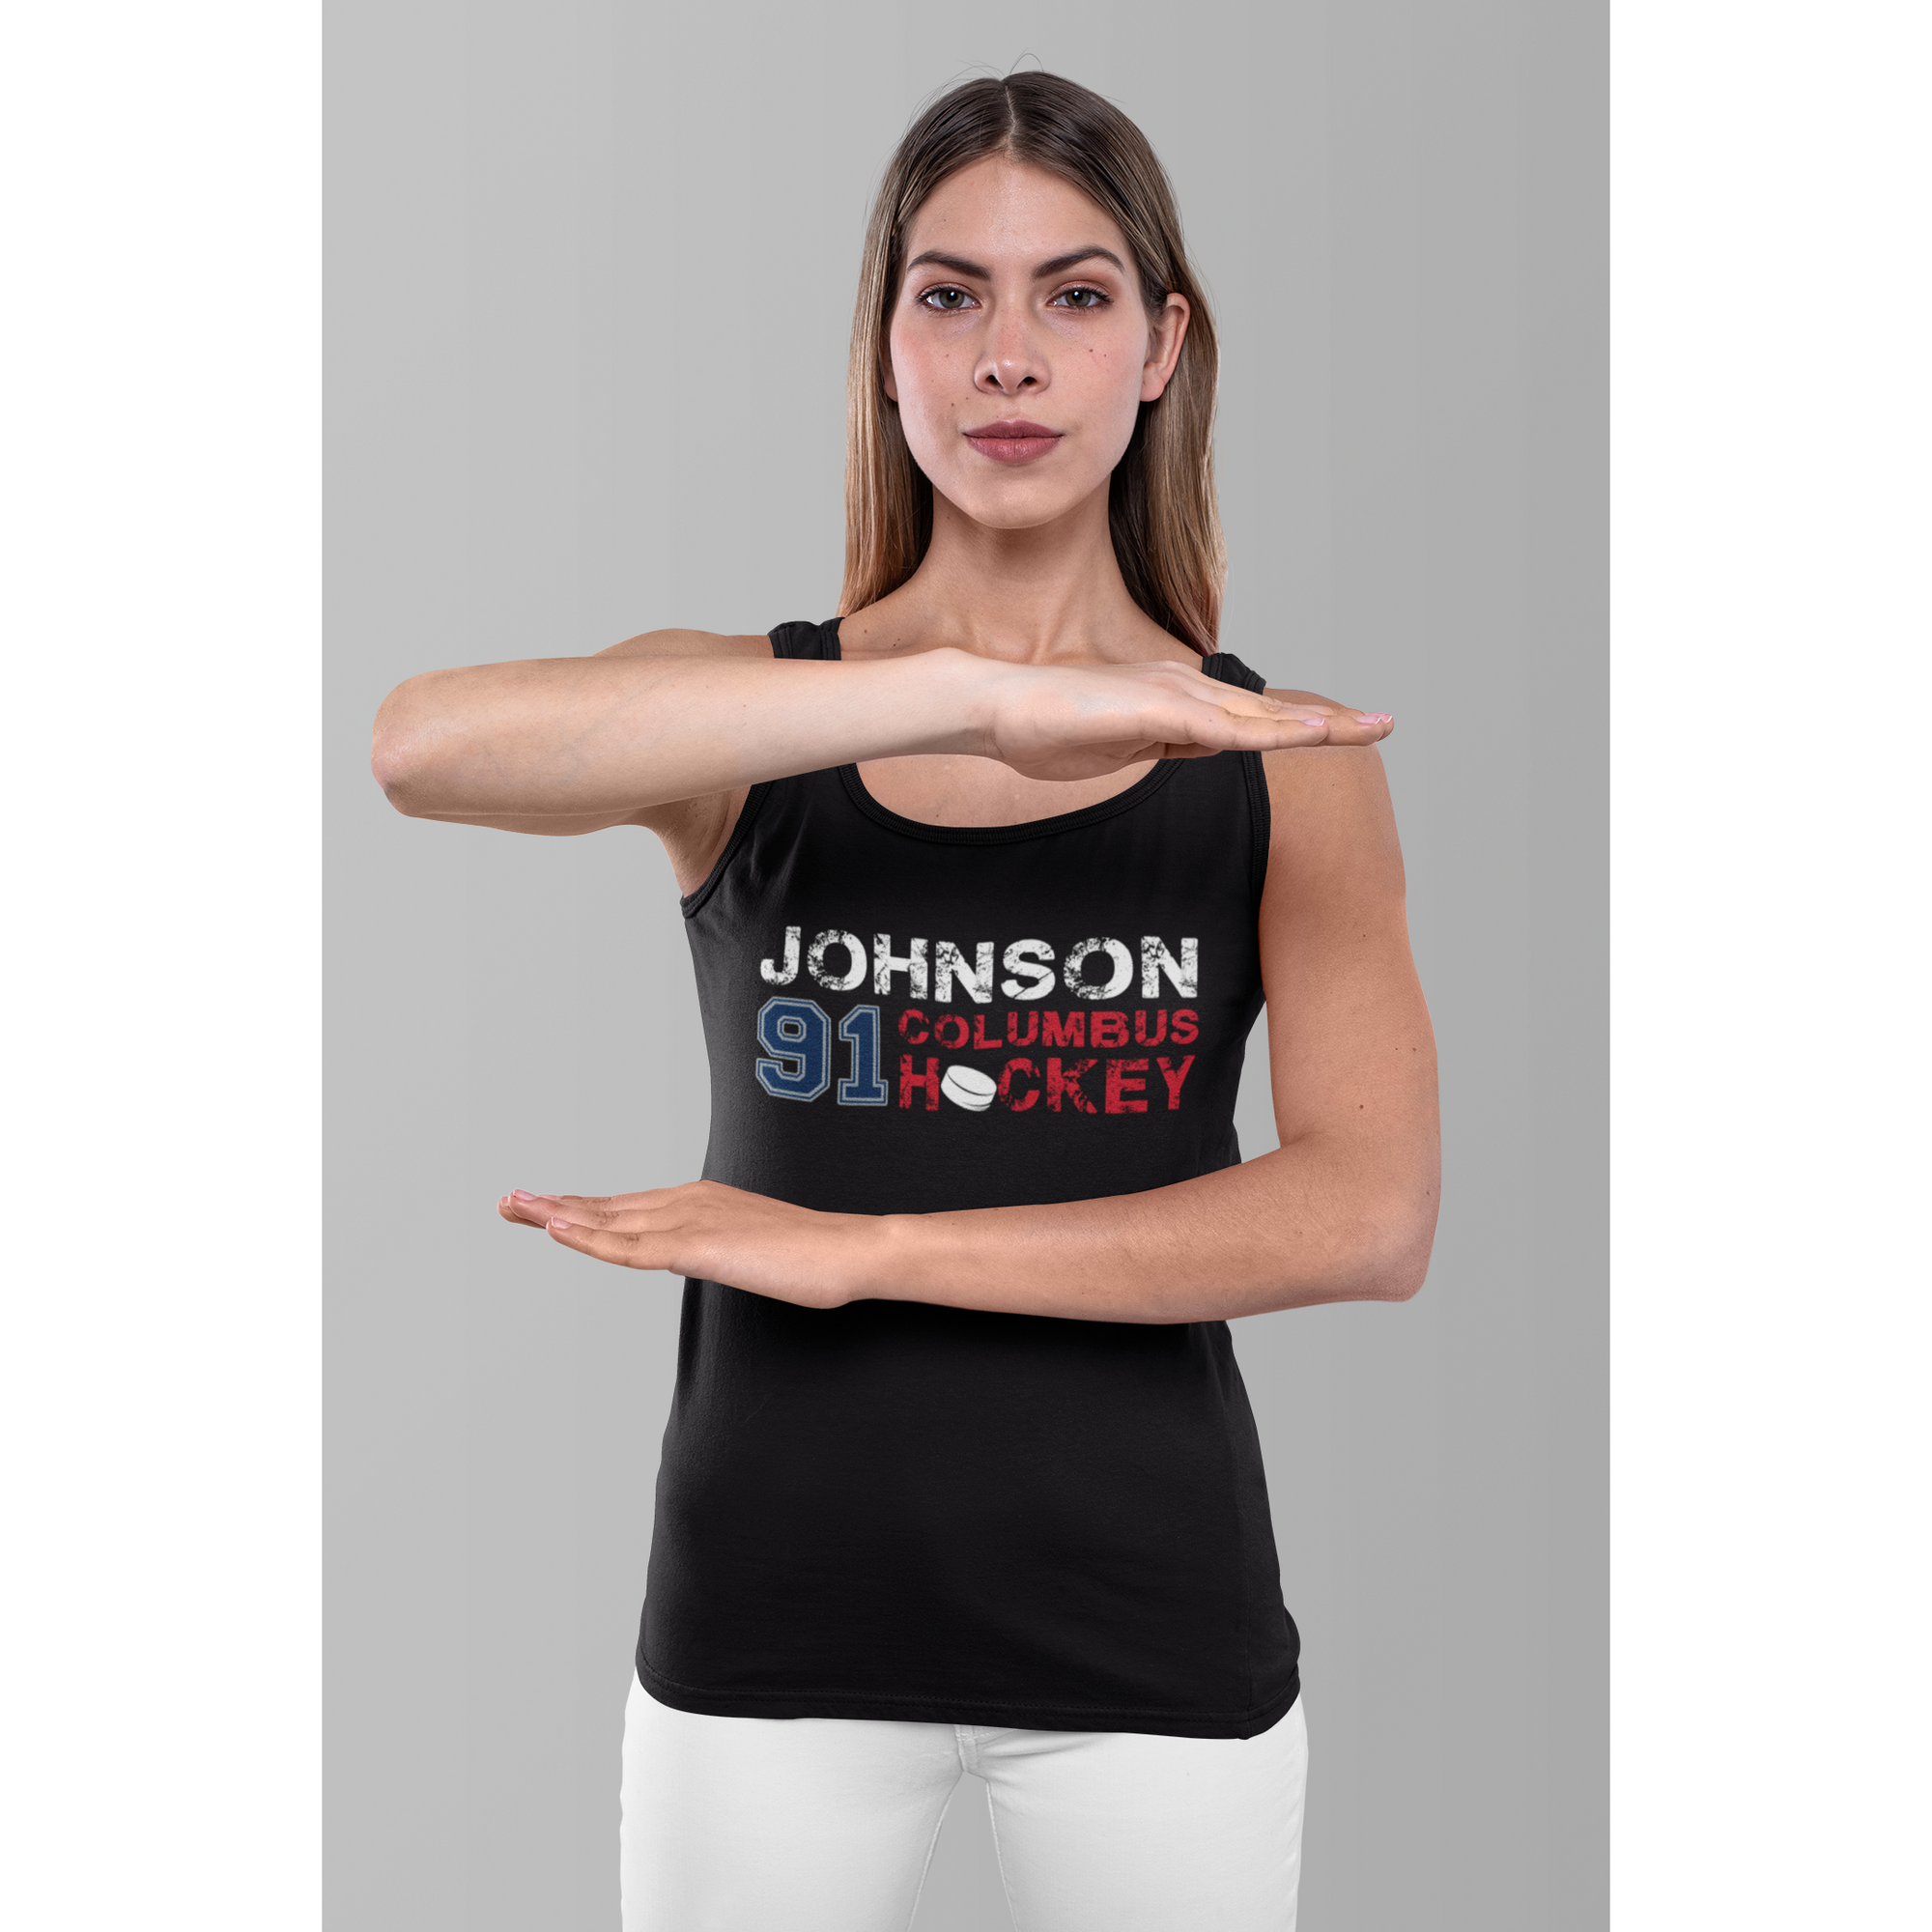 Johnson 91 Columbus Hockey Women's Tri-Blend Racerback Tank Top